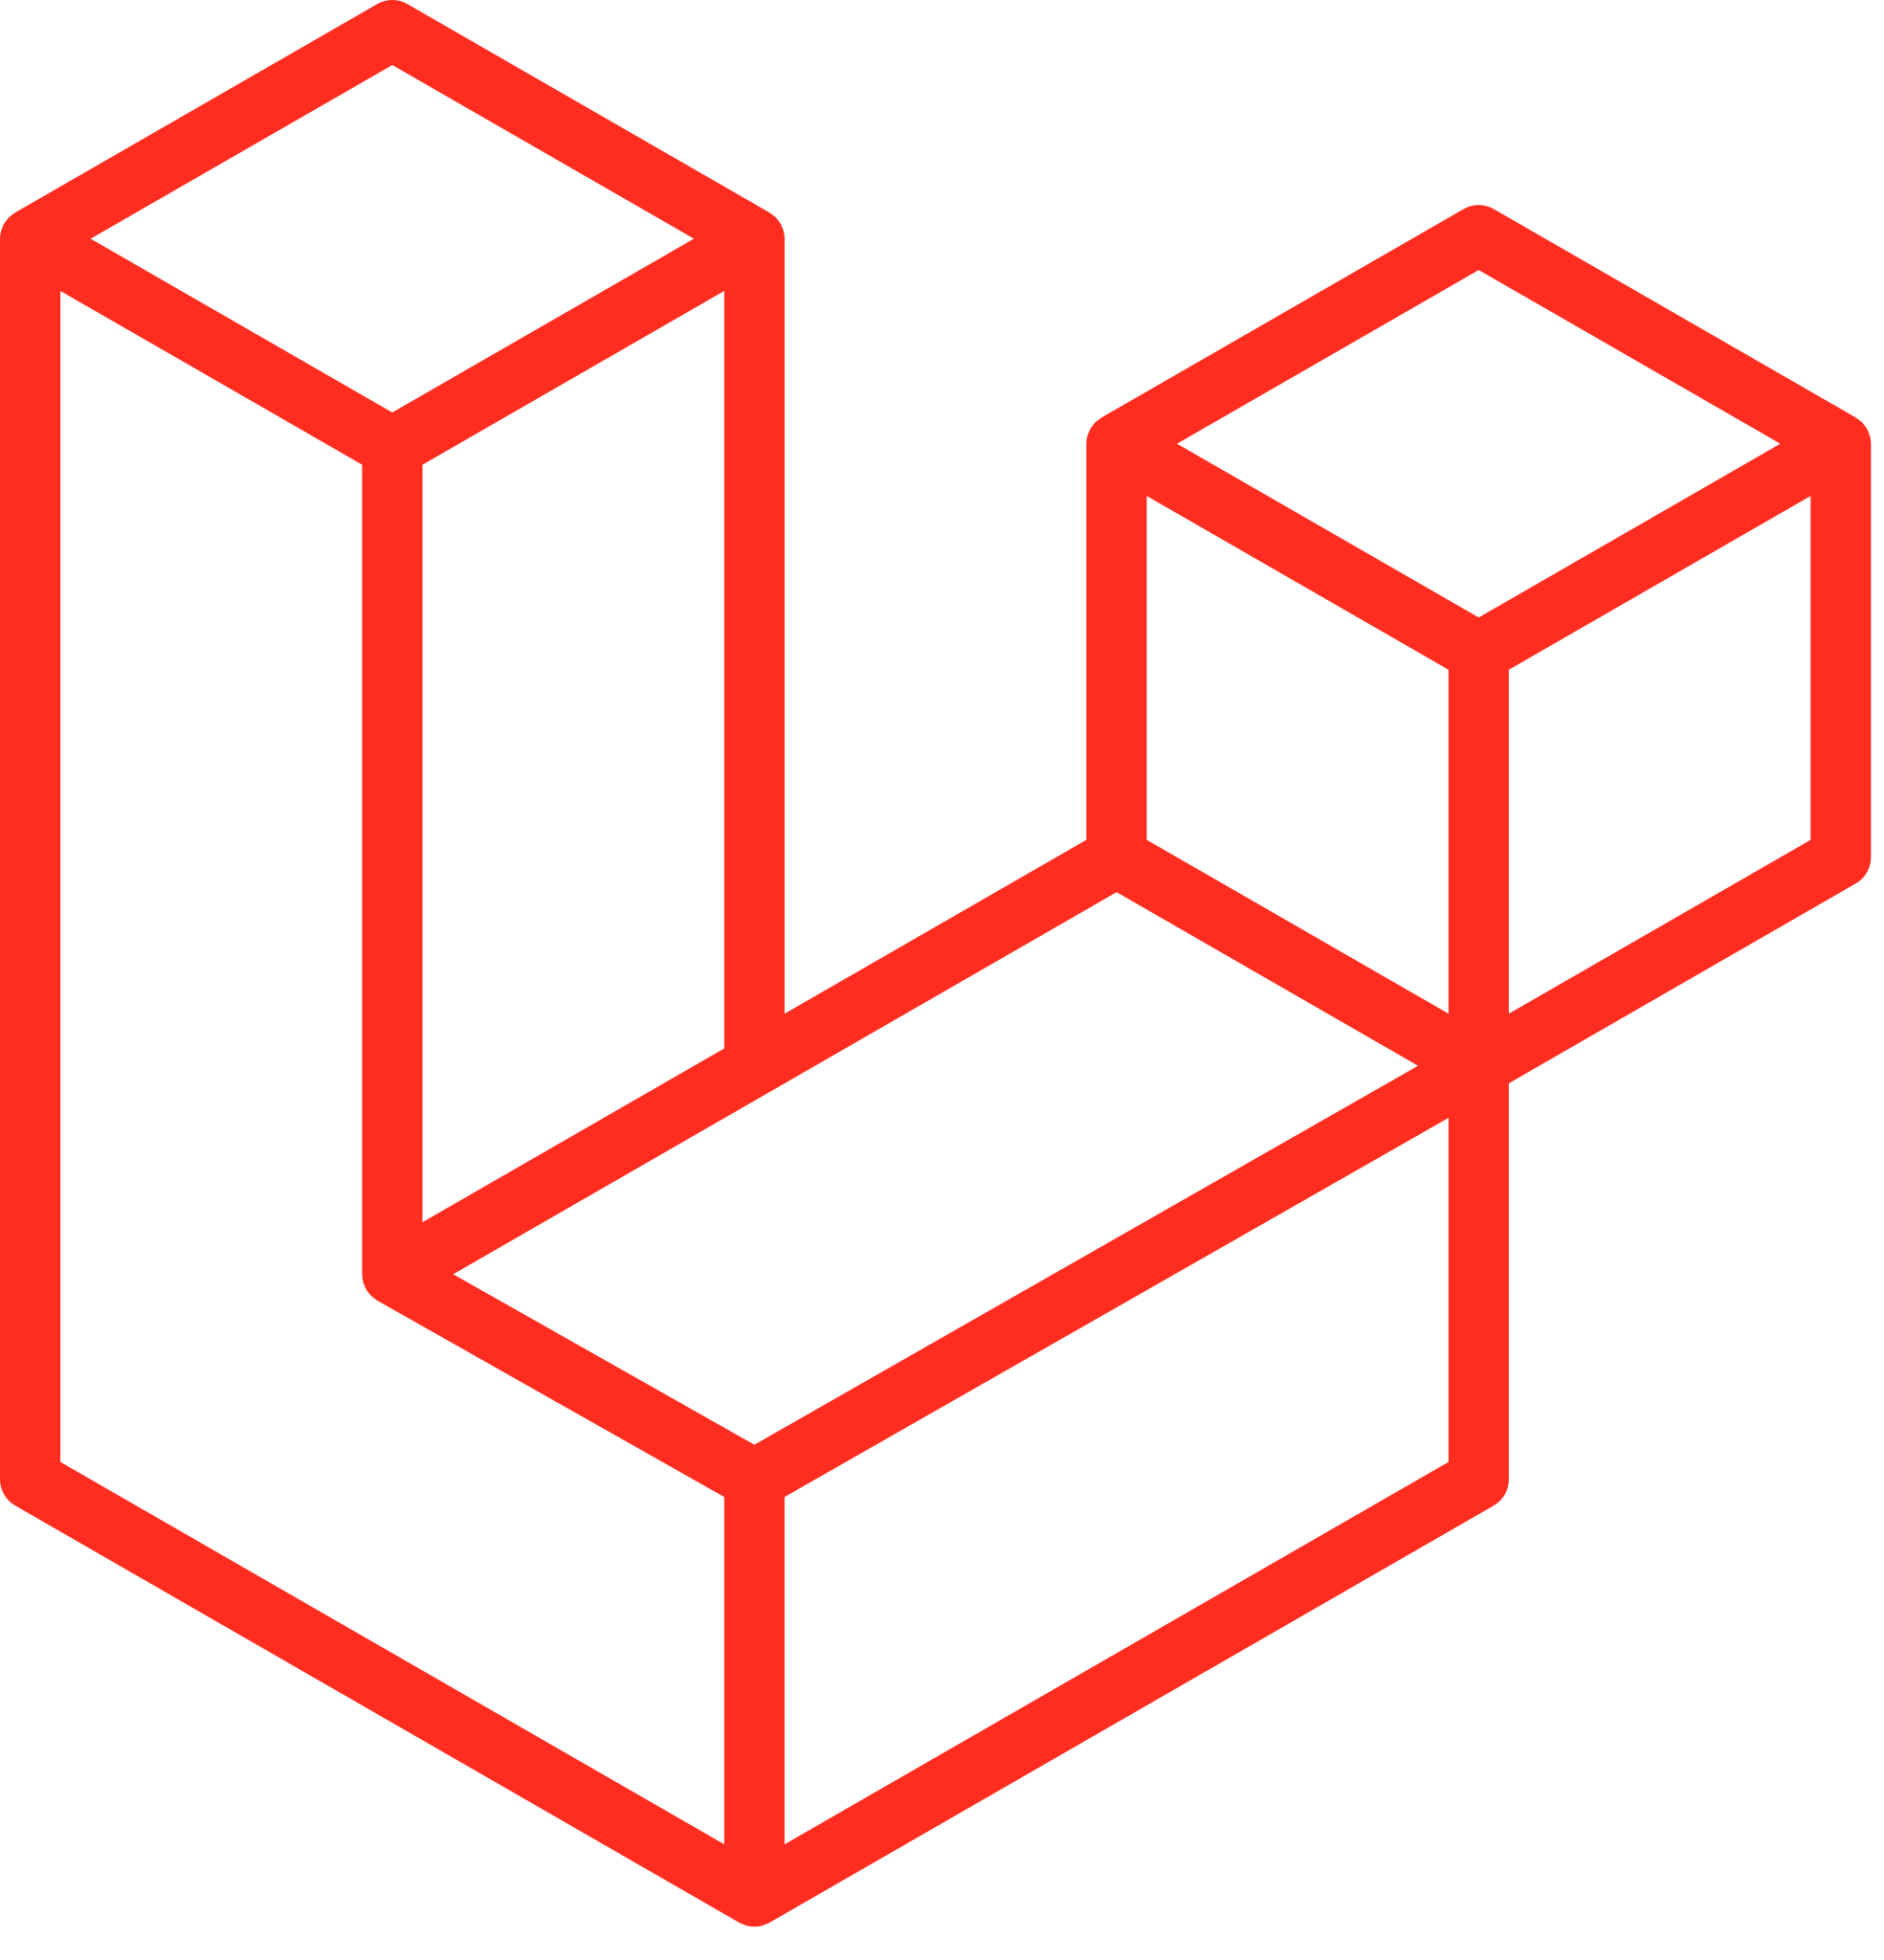 Laravel-Logo